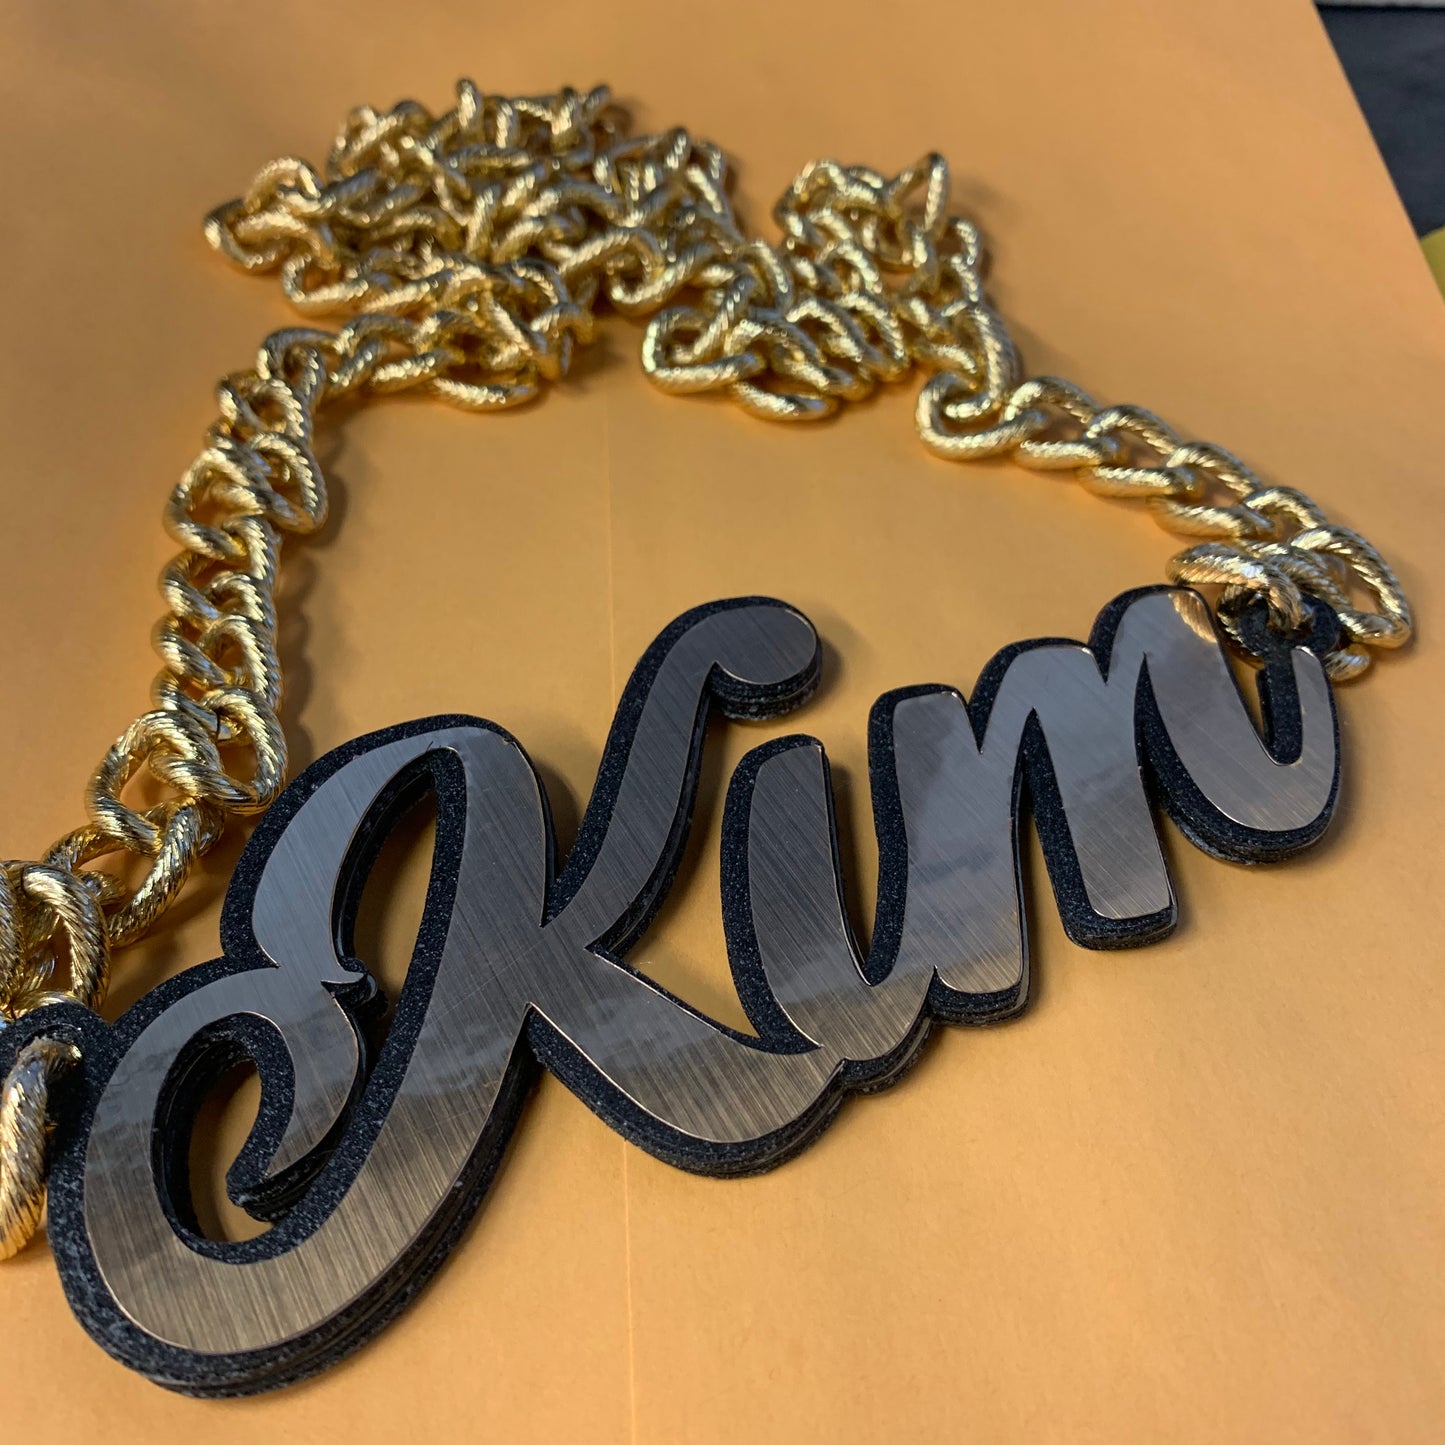 Name Chain Costume Jewelry